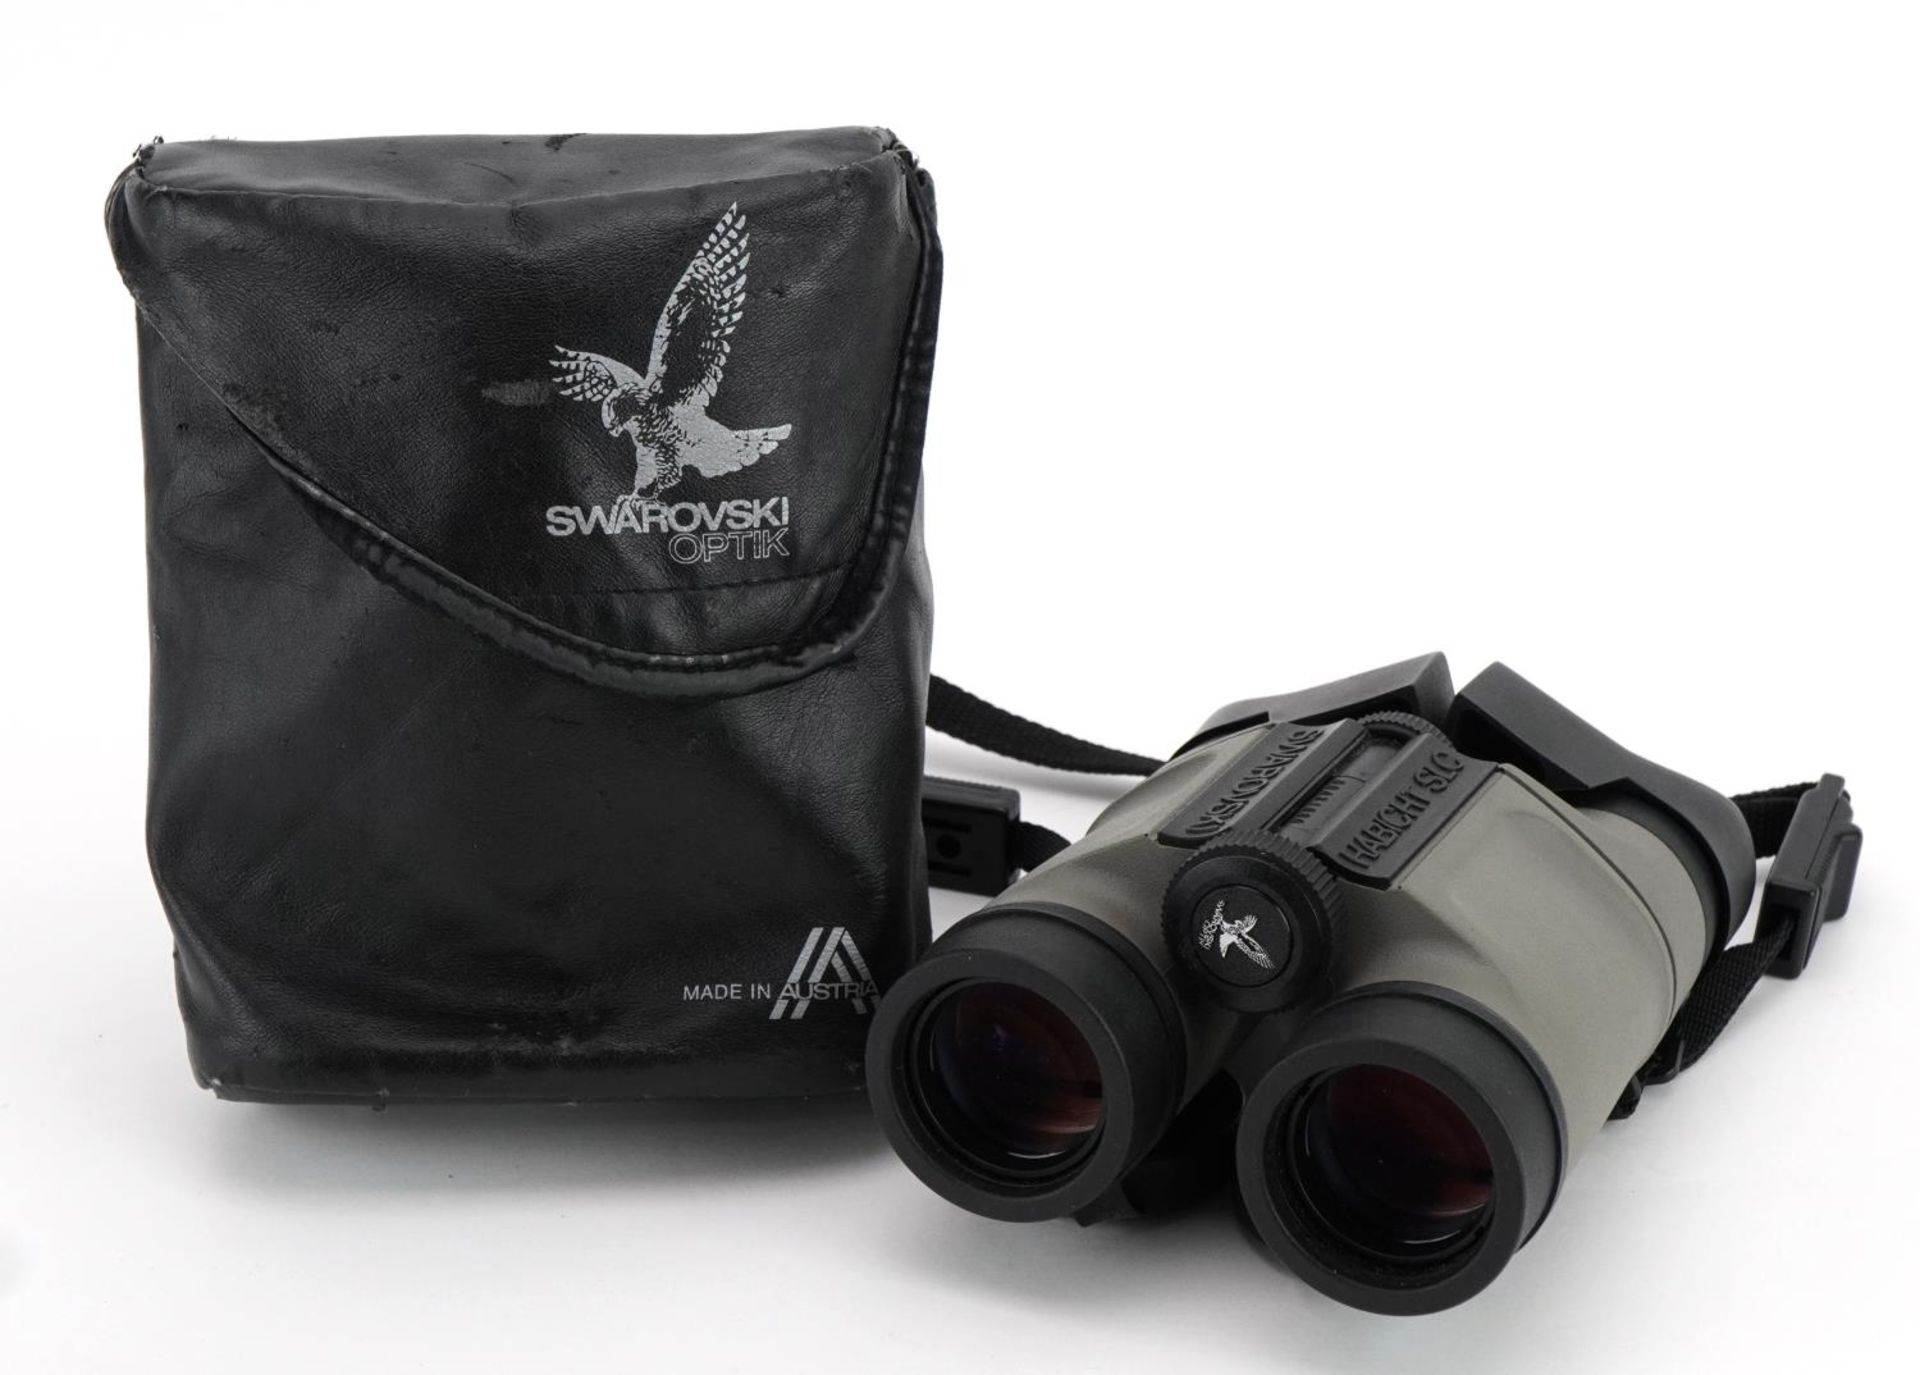 Pair of Swarovski Habicht SLC 8x30W binoculars with case, 15cm in length